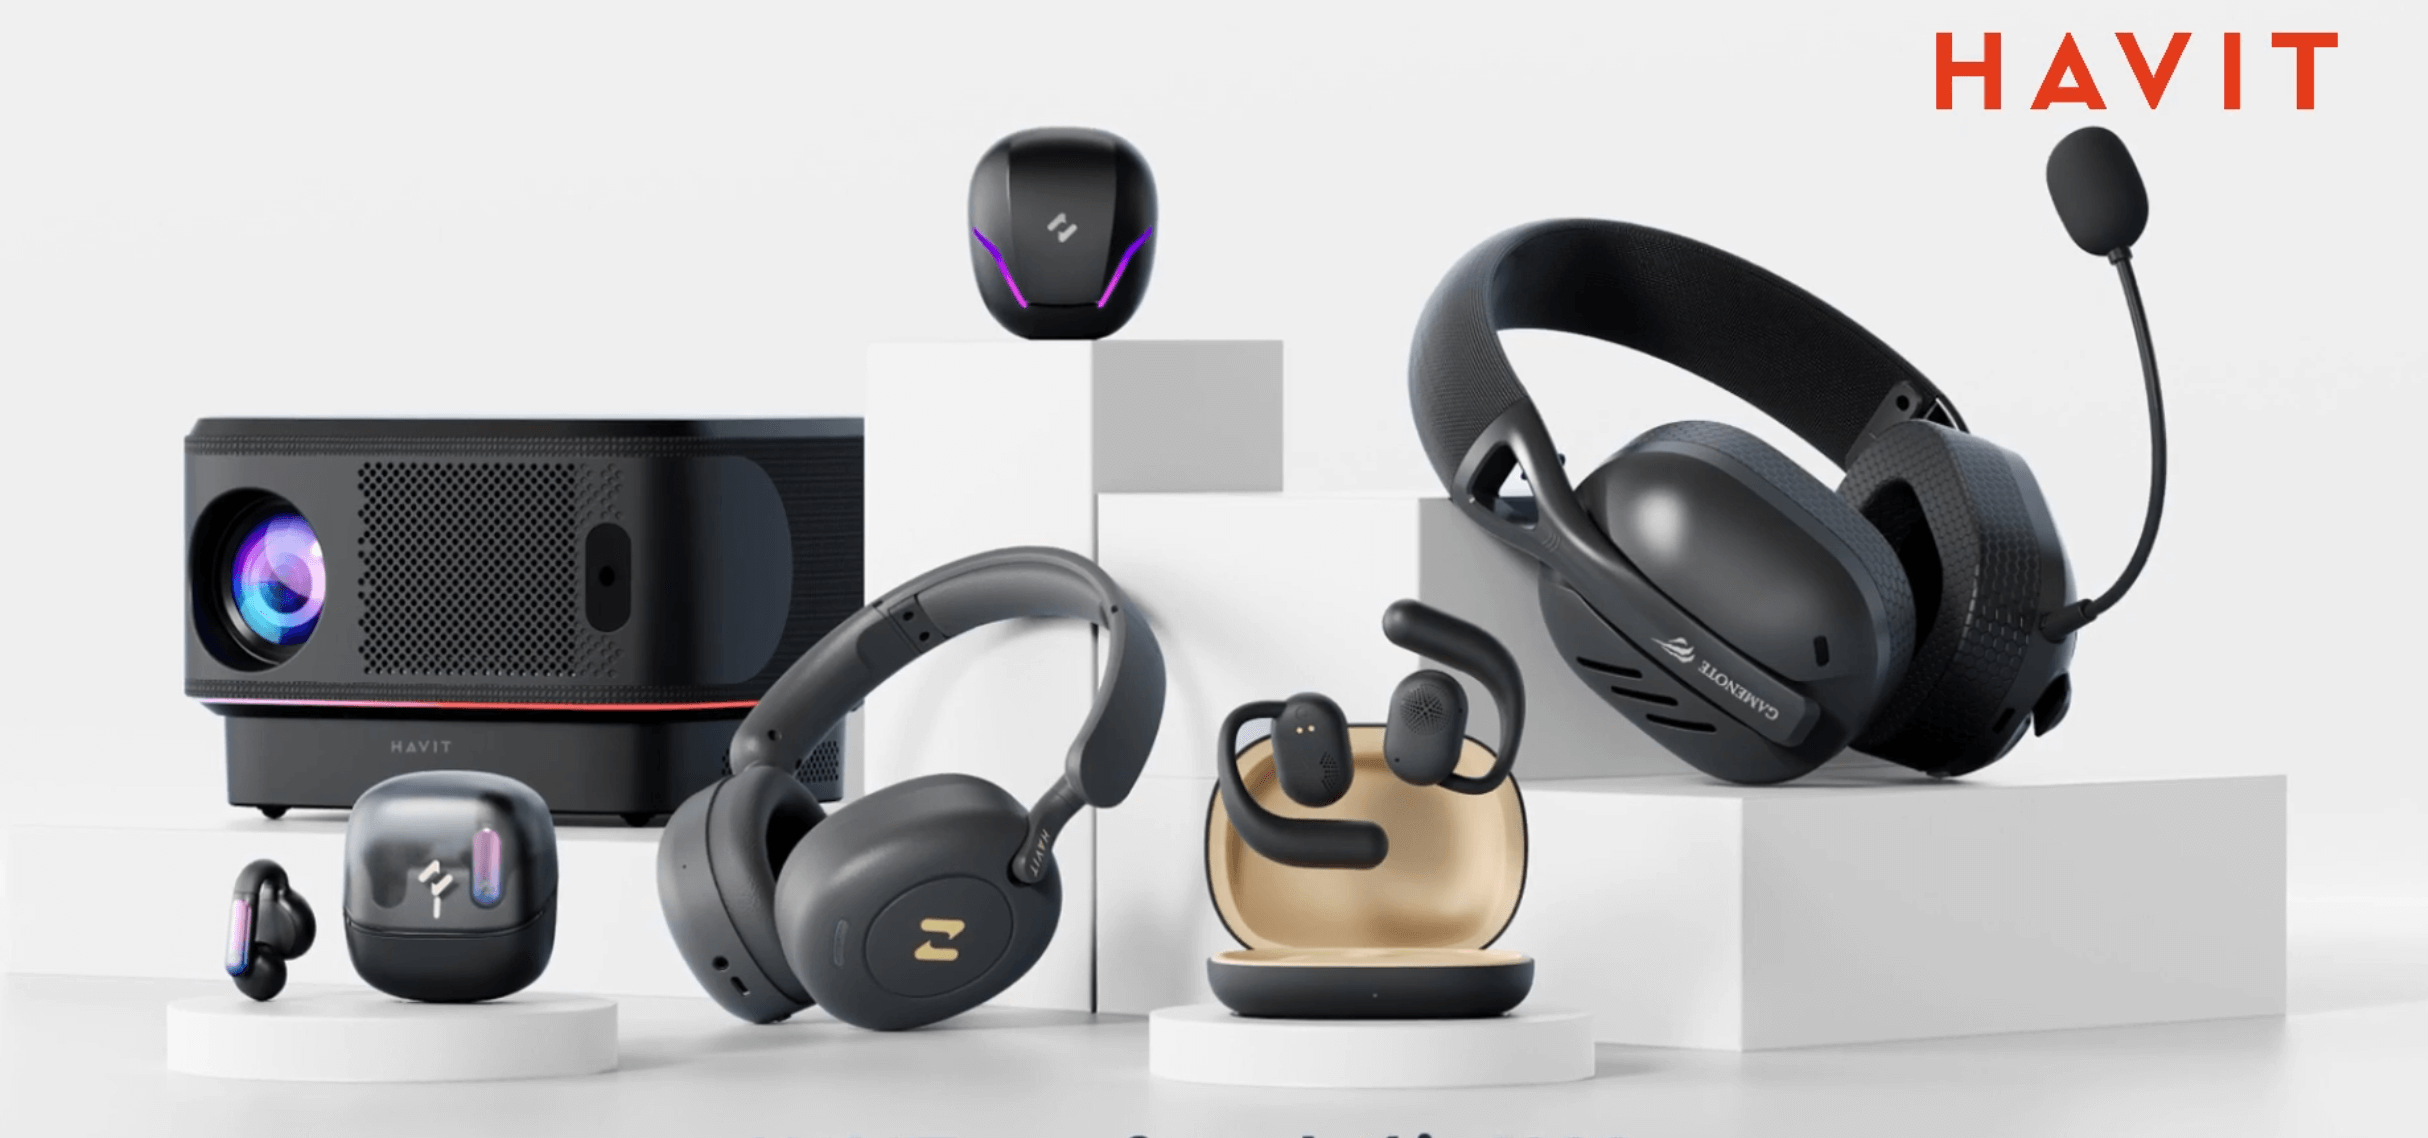 HAVIT unveils brand new headphones with Spatial Audio and Hi-Res Audio Certification